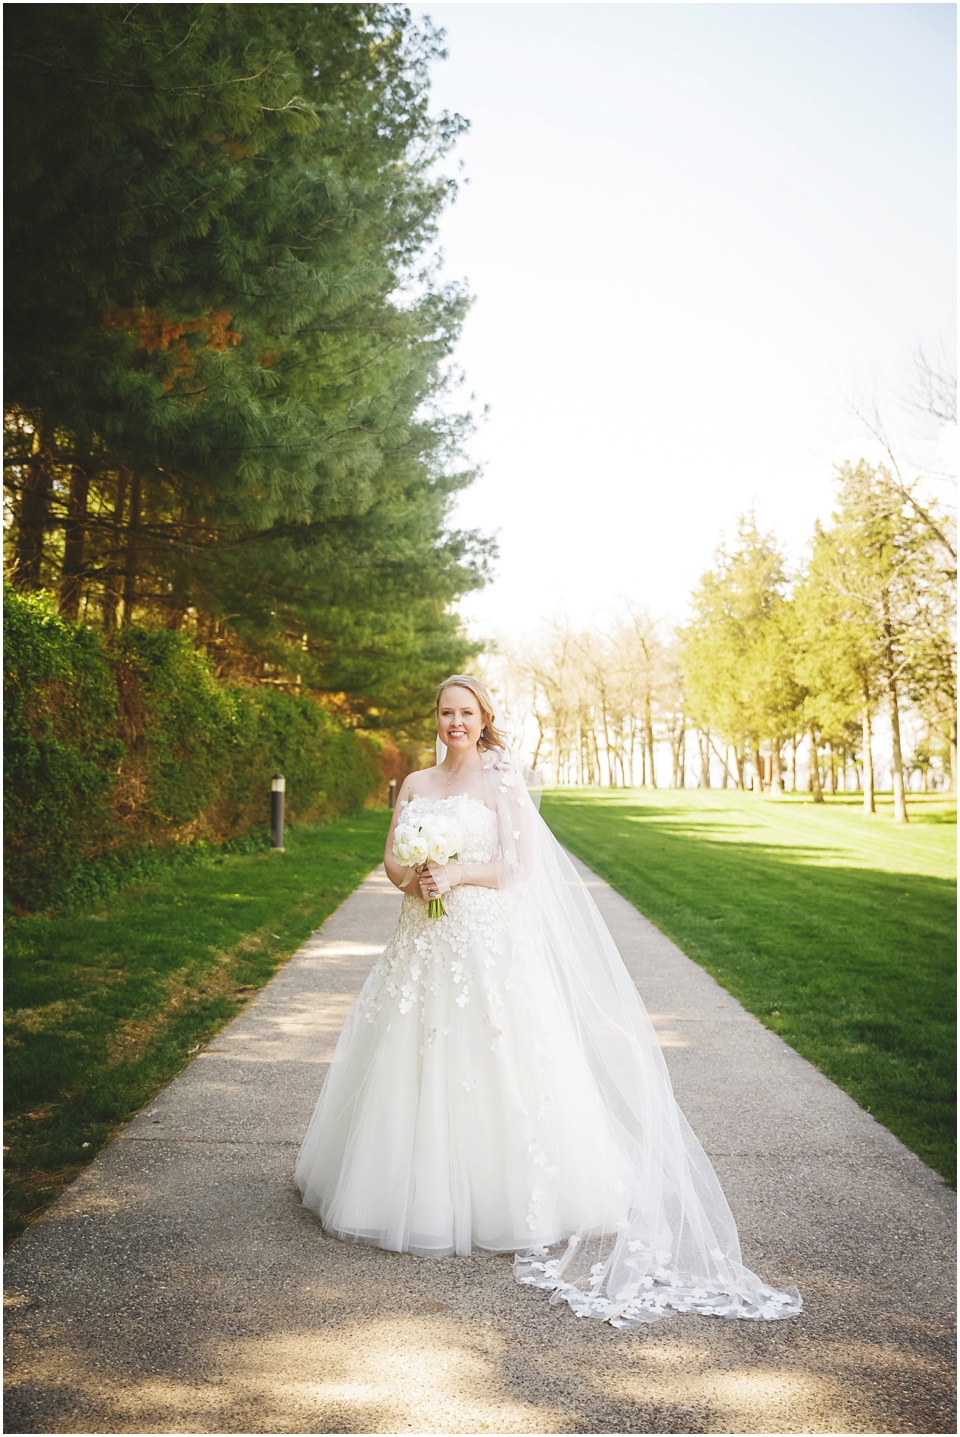 Bridal portraits at Allerton Park by Central Illinois Wedding Photographer Rachael Schirano.